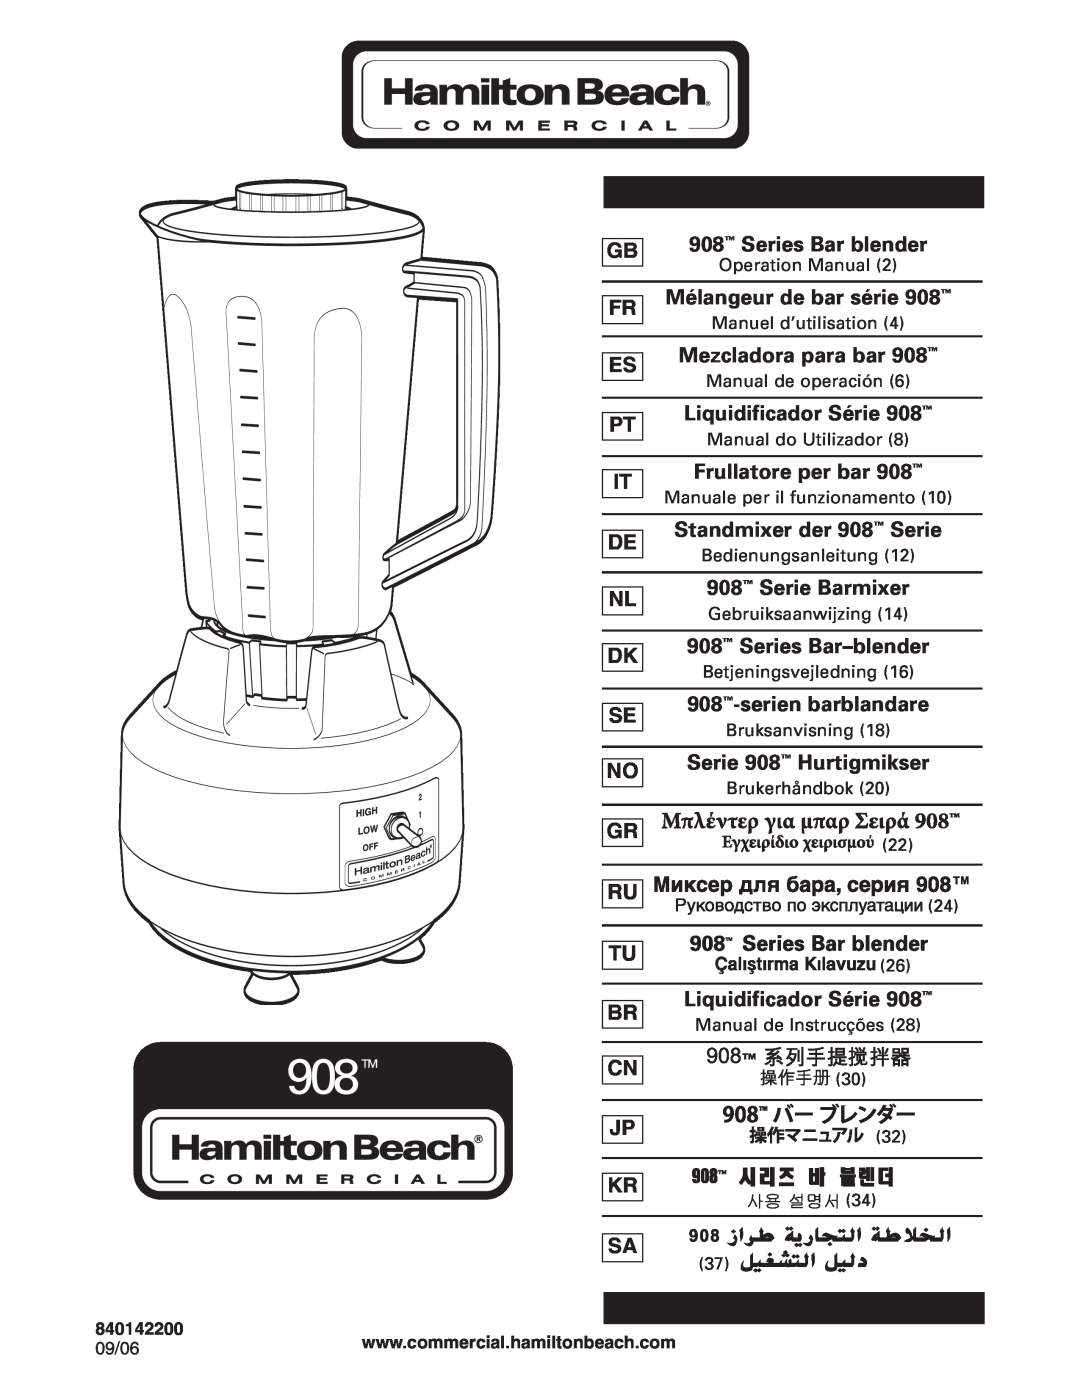 Hamilton Beach 908 Series operation manual Series Bar blender 